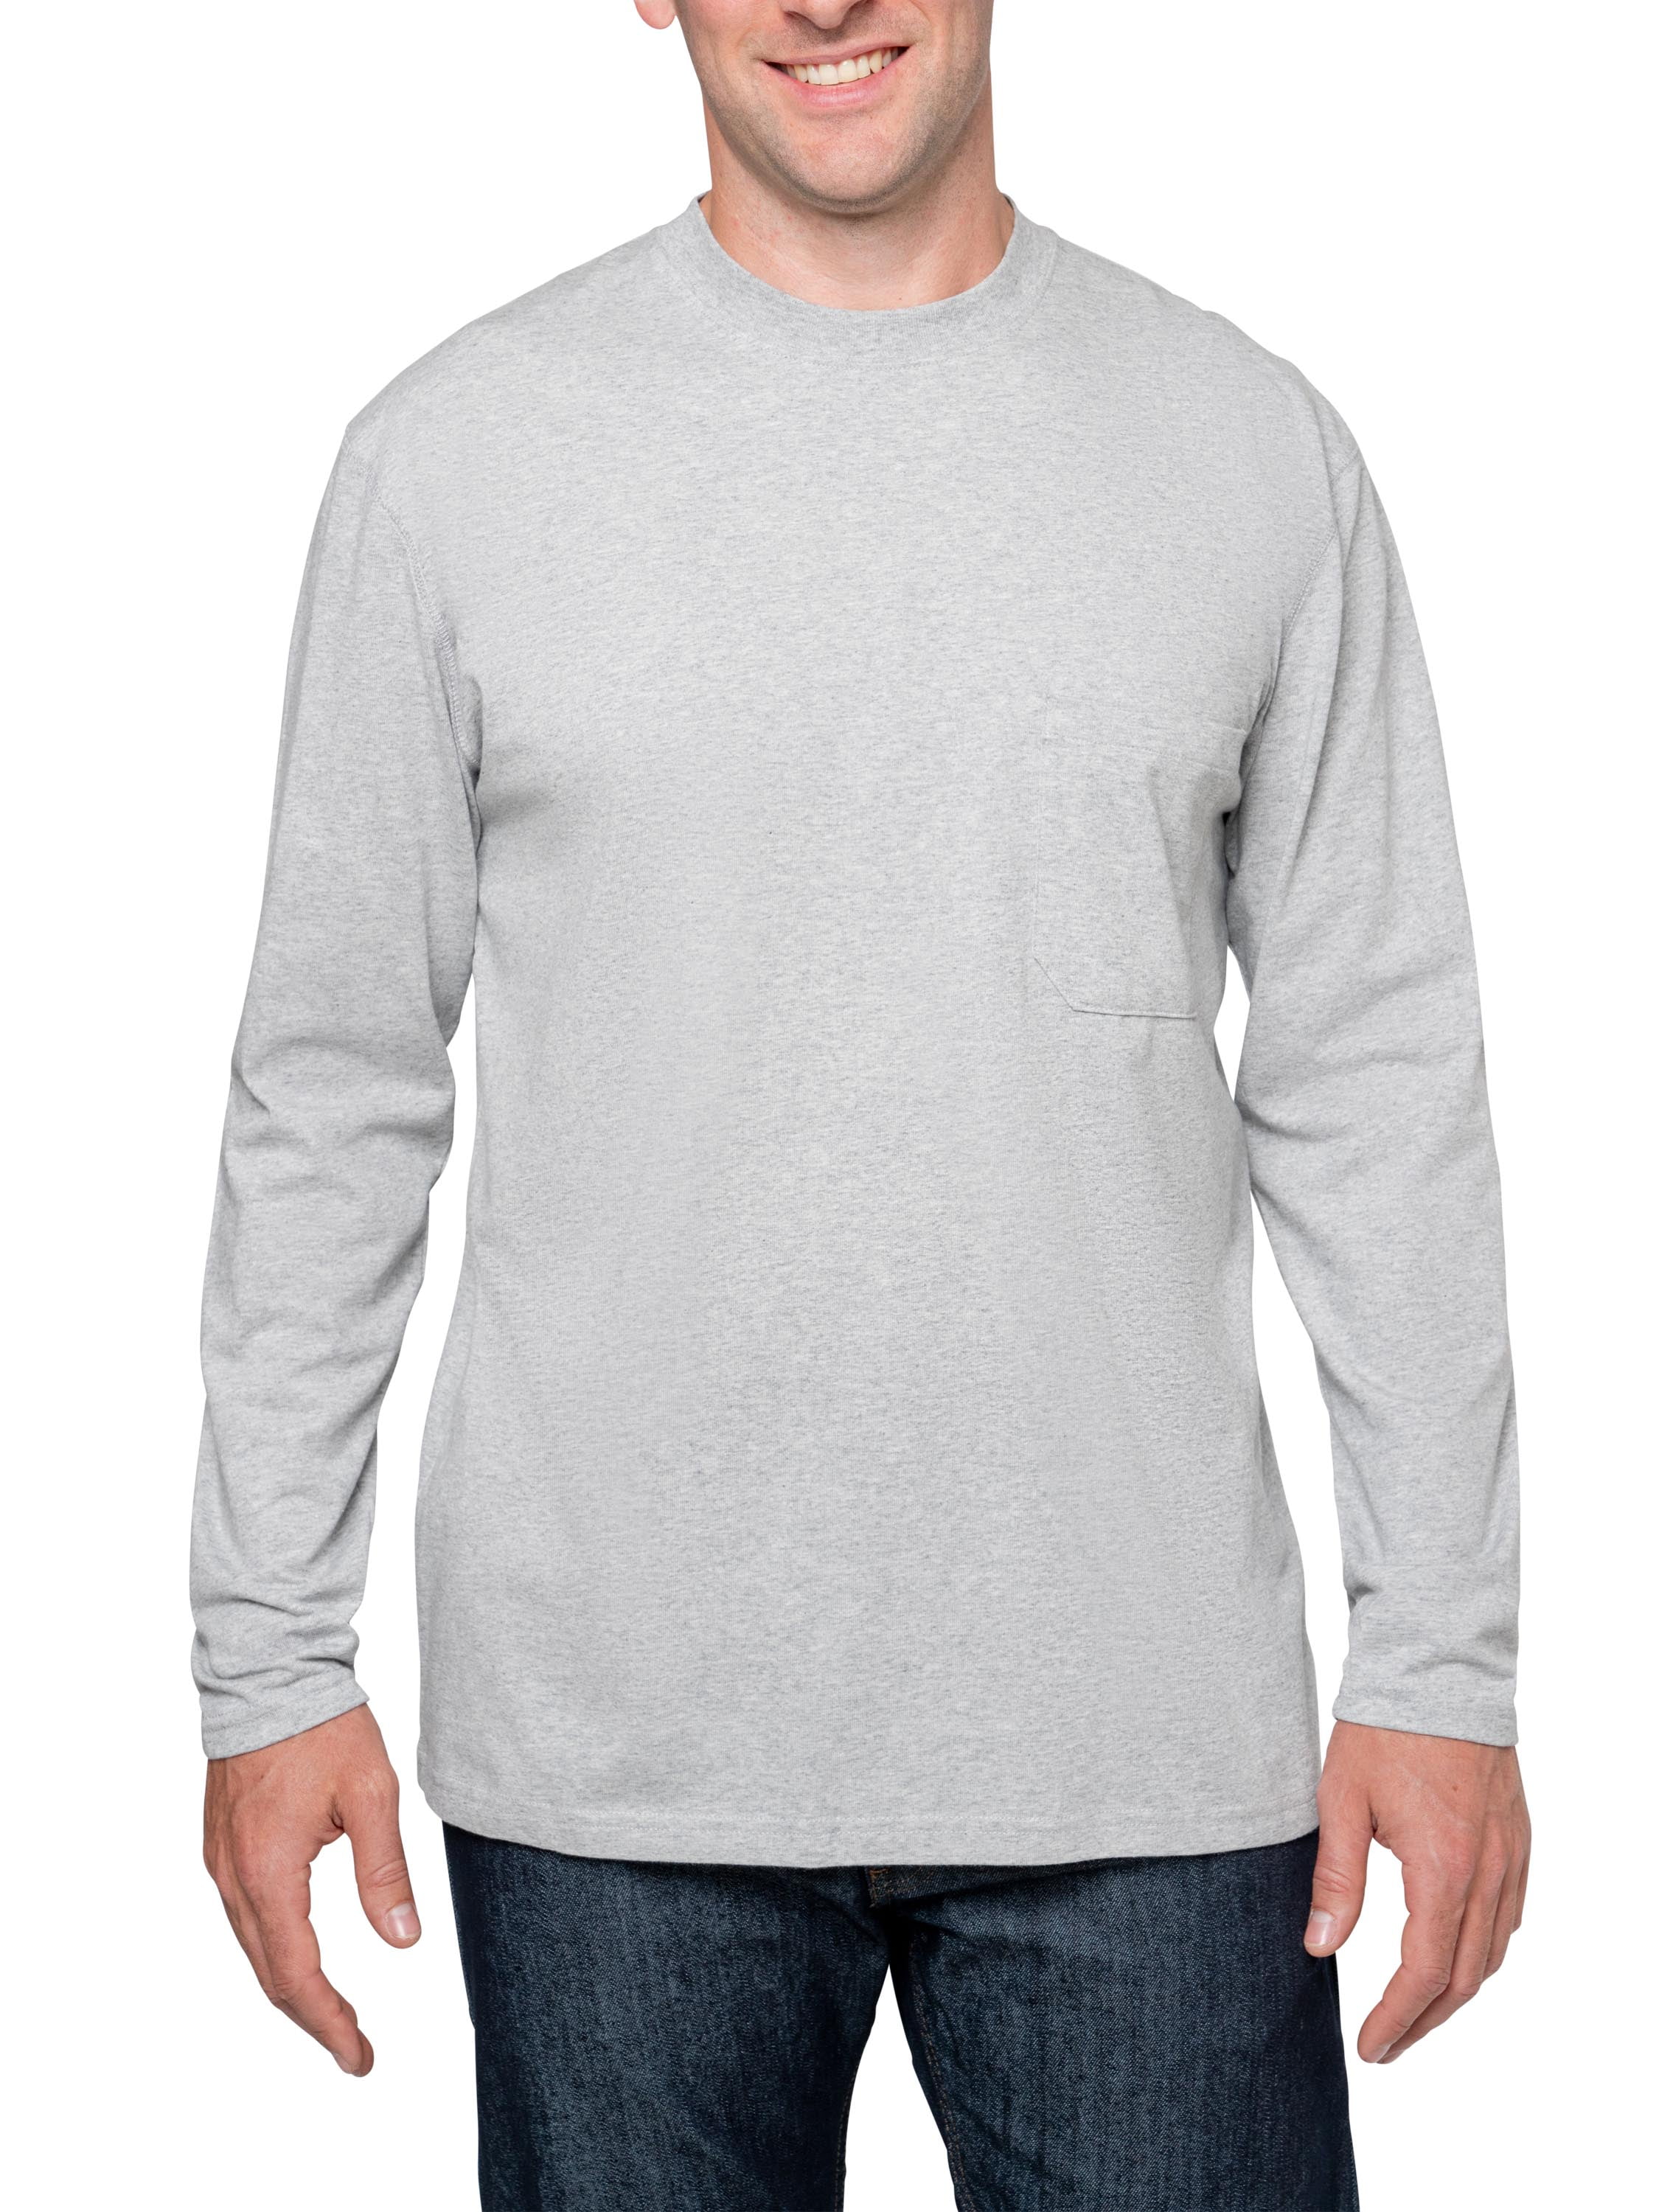 Insect Shield Men's UPF Dri-Balance Long Sleeve Pocket T-Shirt, Heather ...